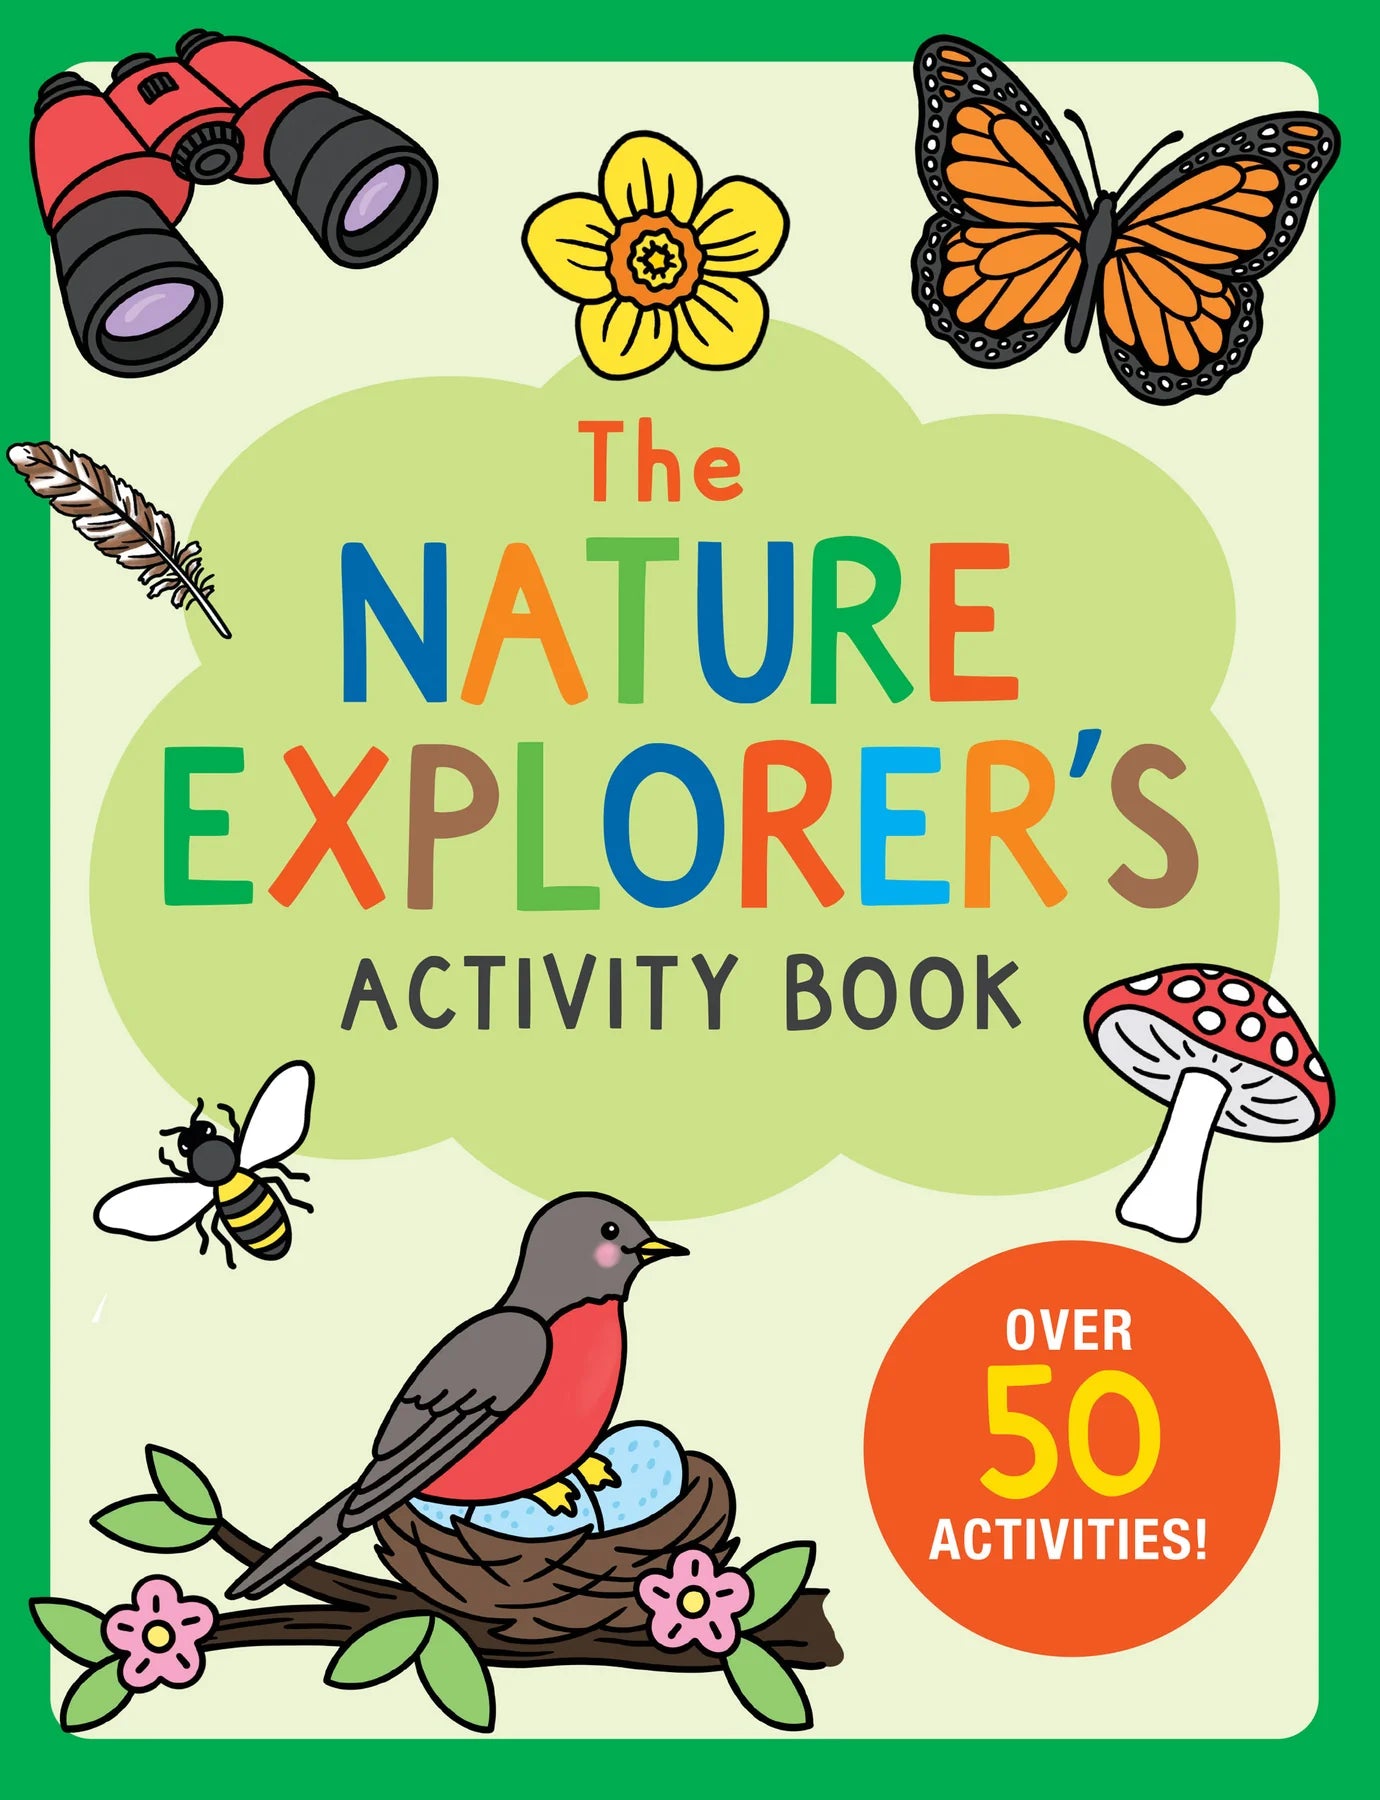 The Nature Explorer’s Activity Book